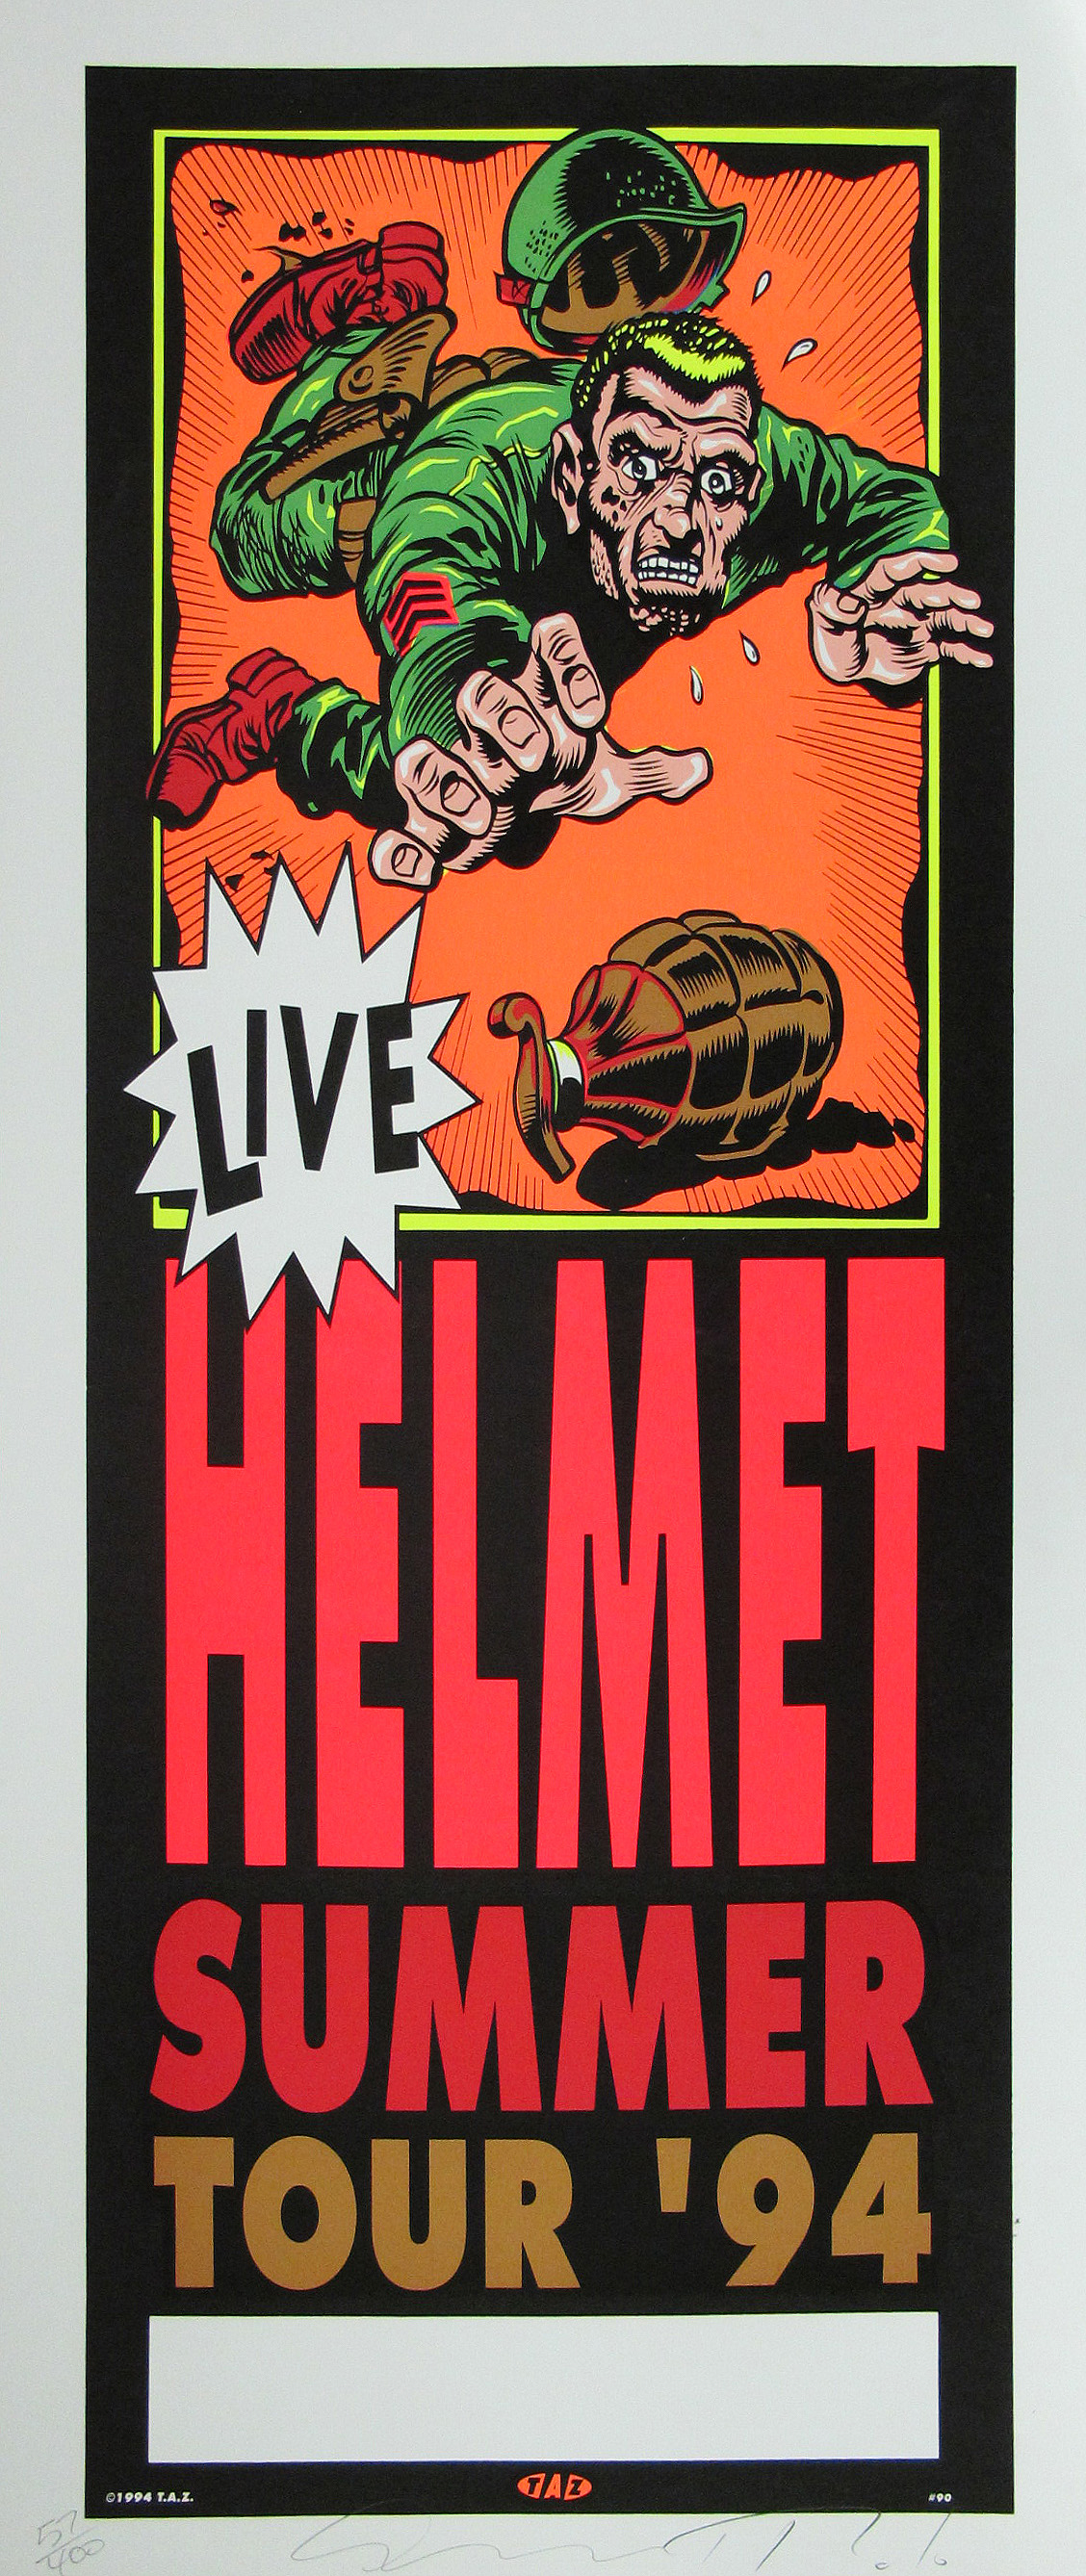 Helmet Summer Tour Poster